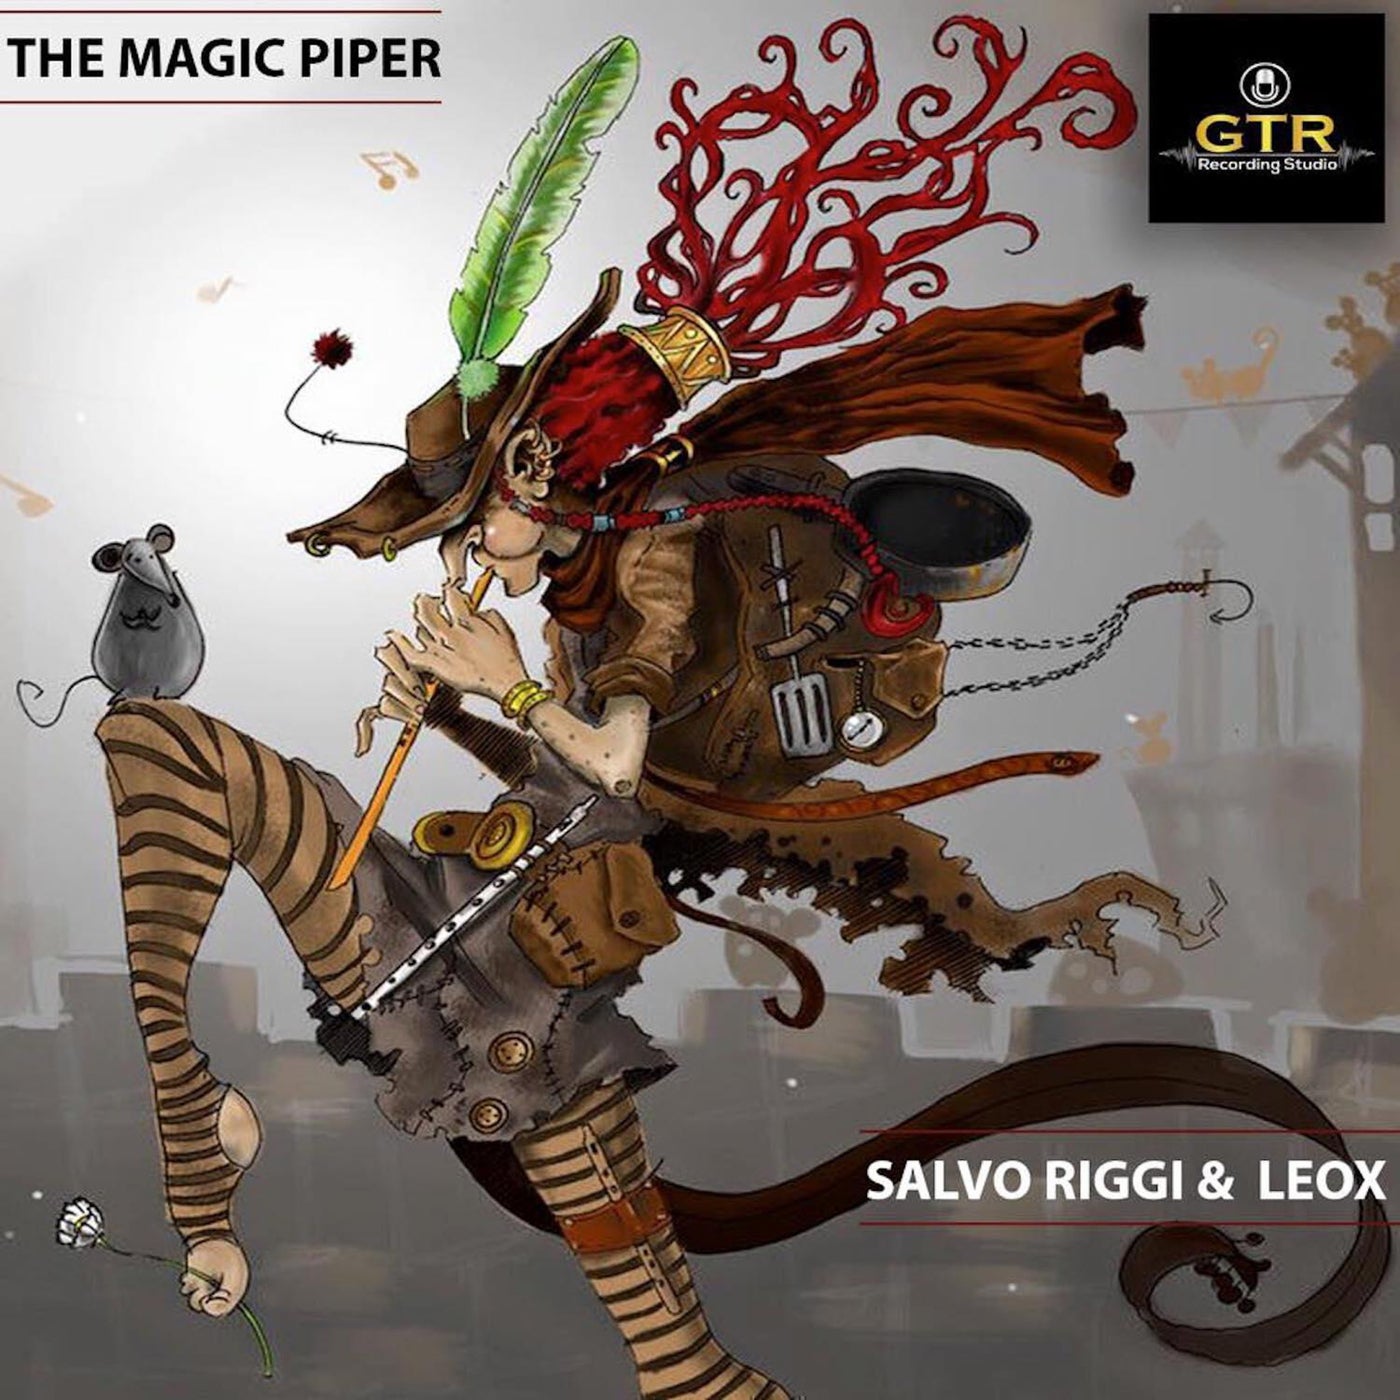 The Magic Piper